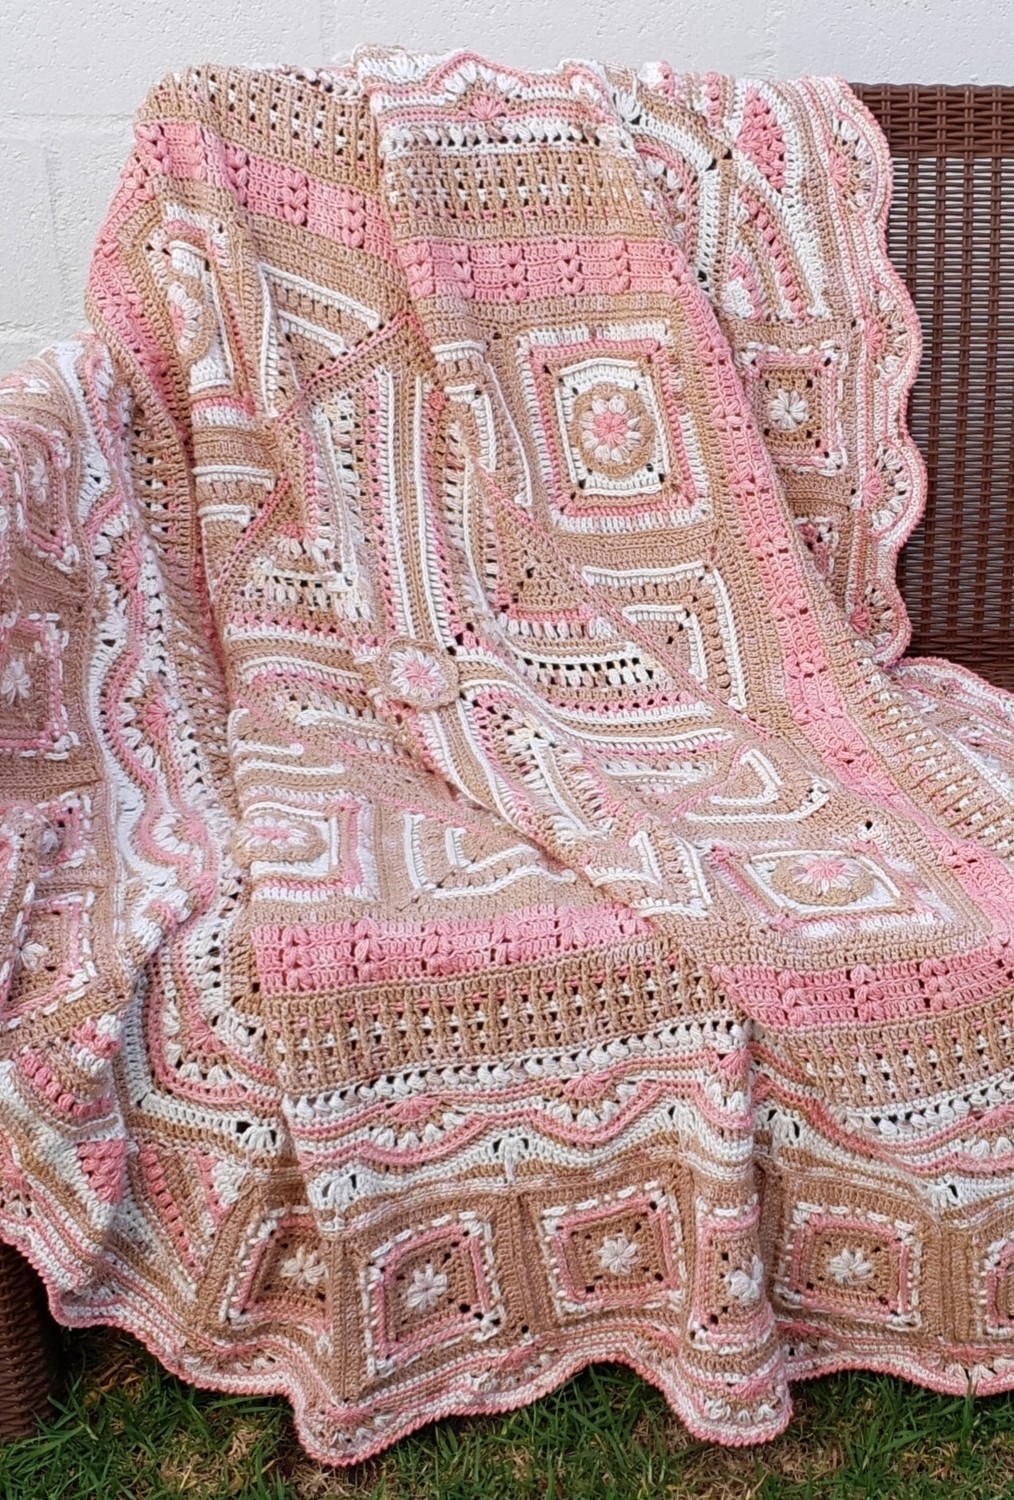 Lotus Lily Crochet-A-Long Blanket Kit - Large